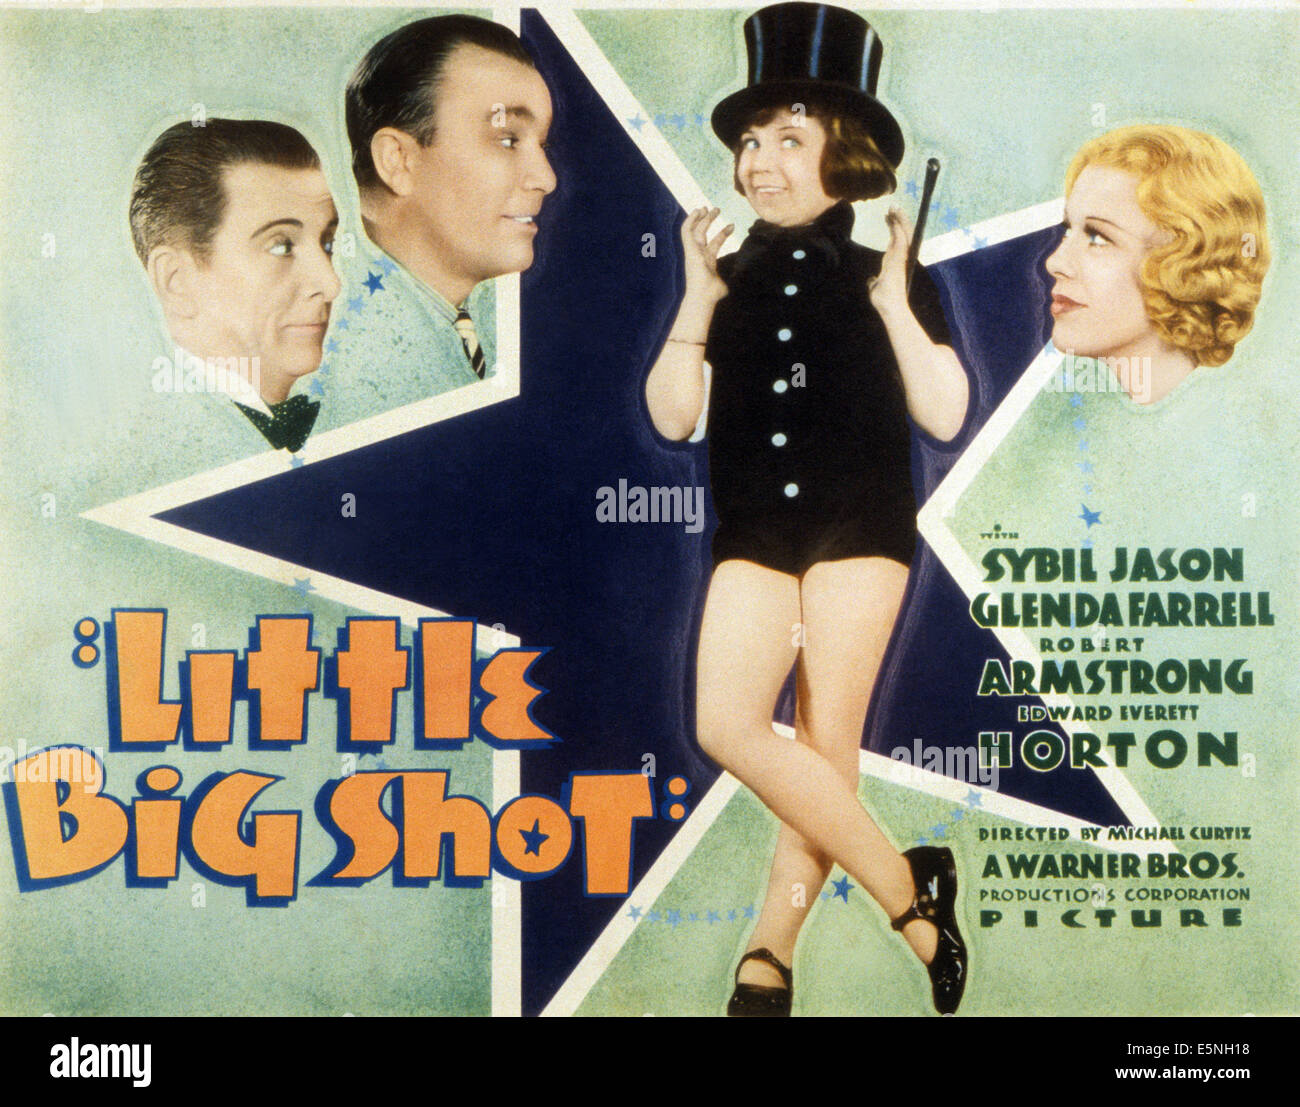 LITTLE BIG SHOT, l-r: Edward Everett Horton, Robert Armstrong, Sybil Jason, Glenda Farrell, poster art, 1935. Stock Photo